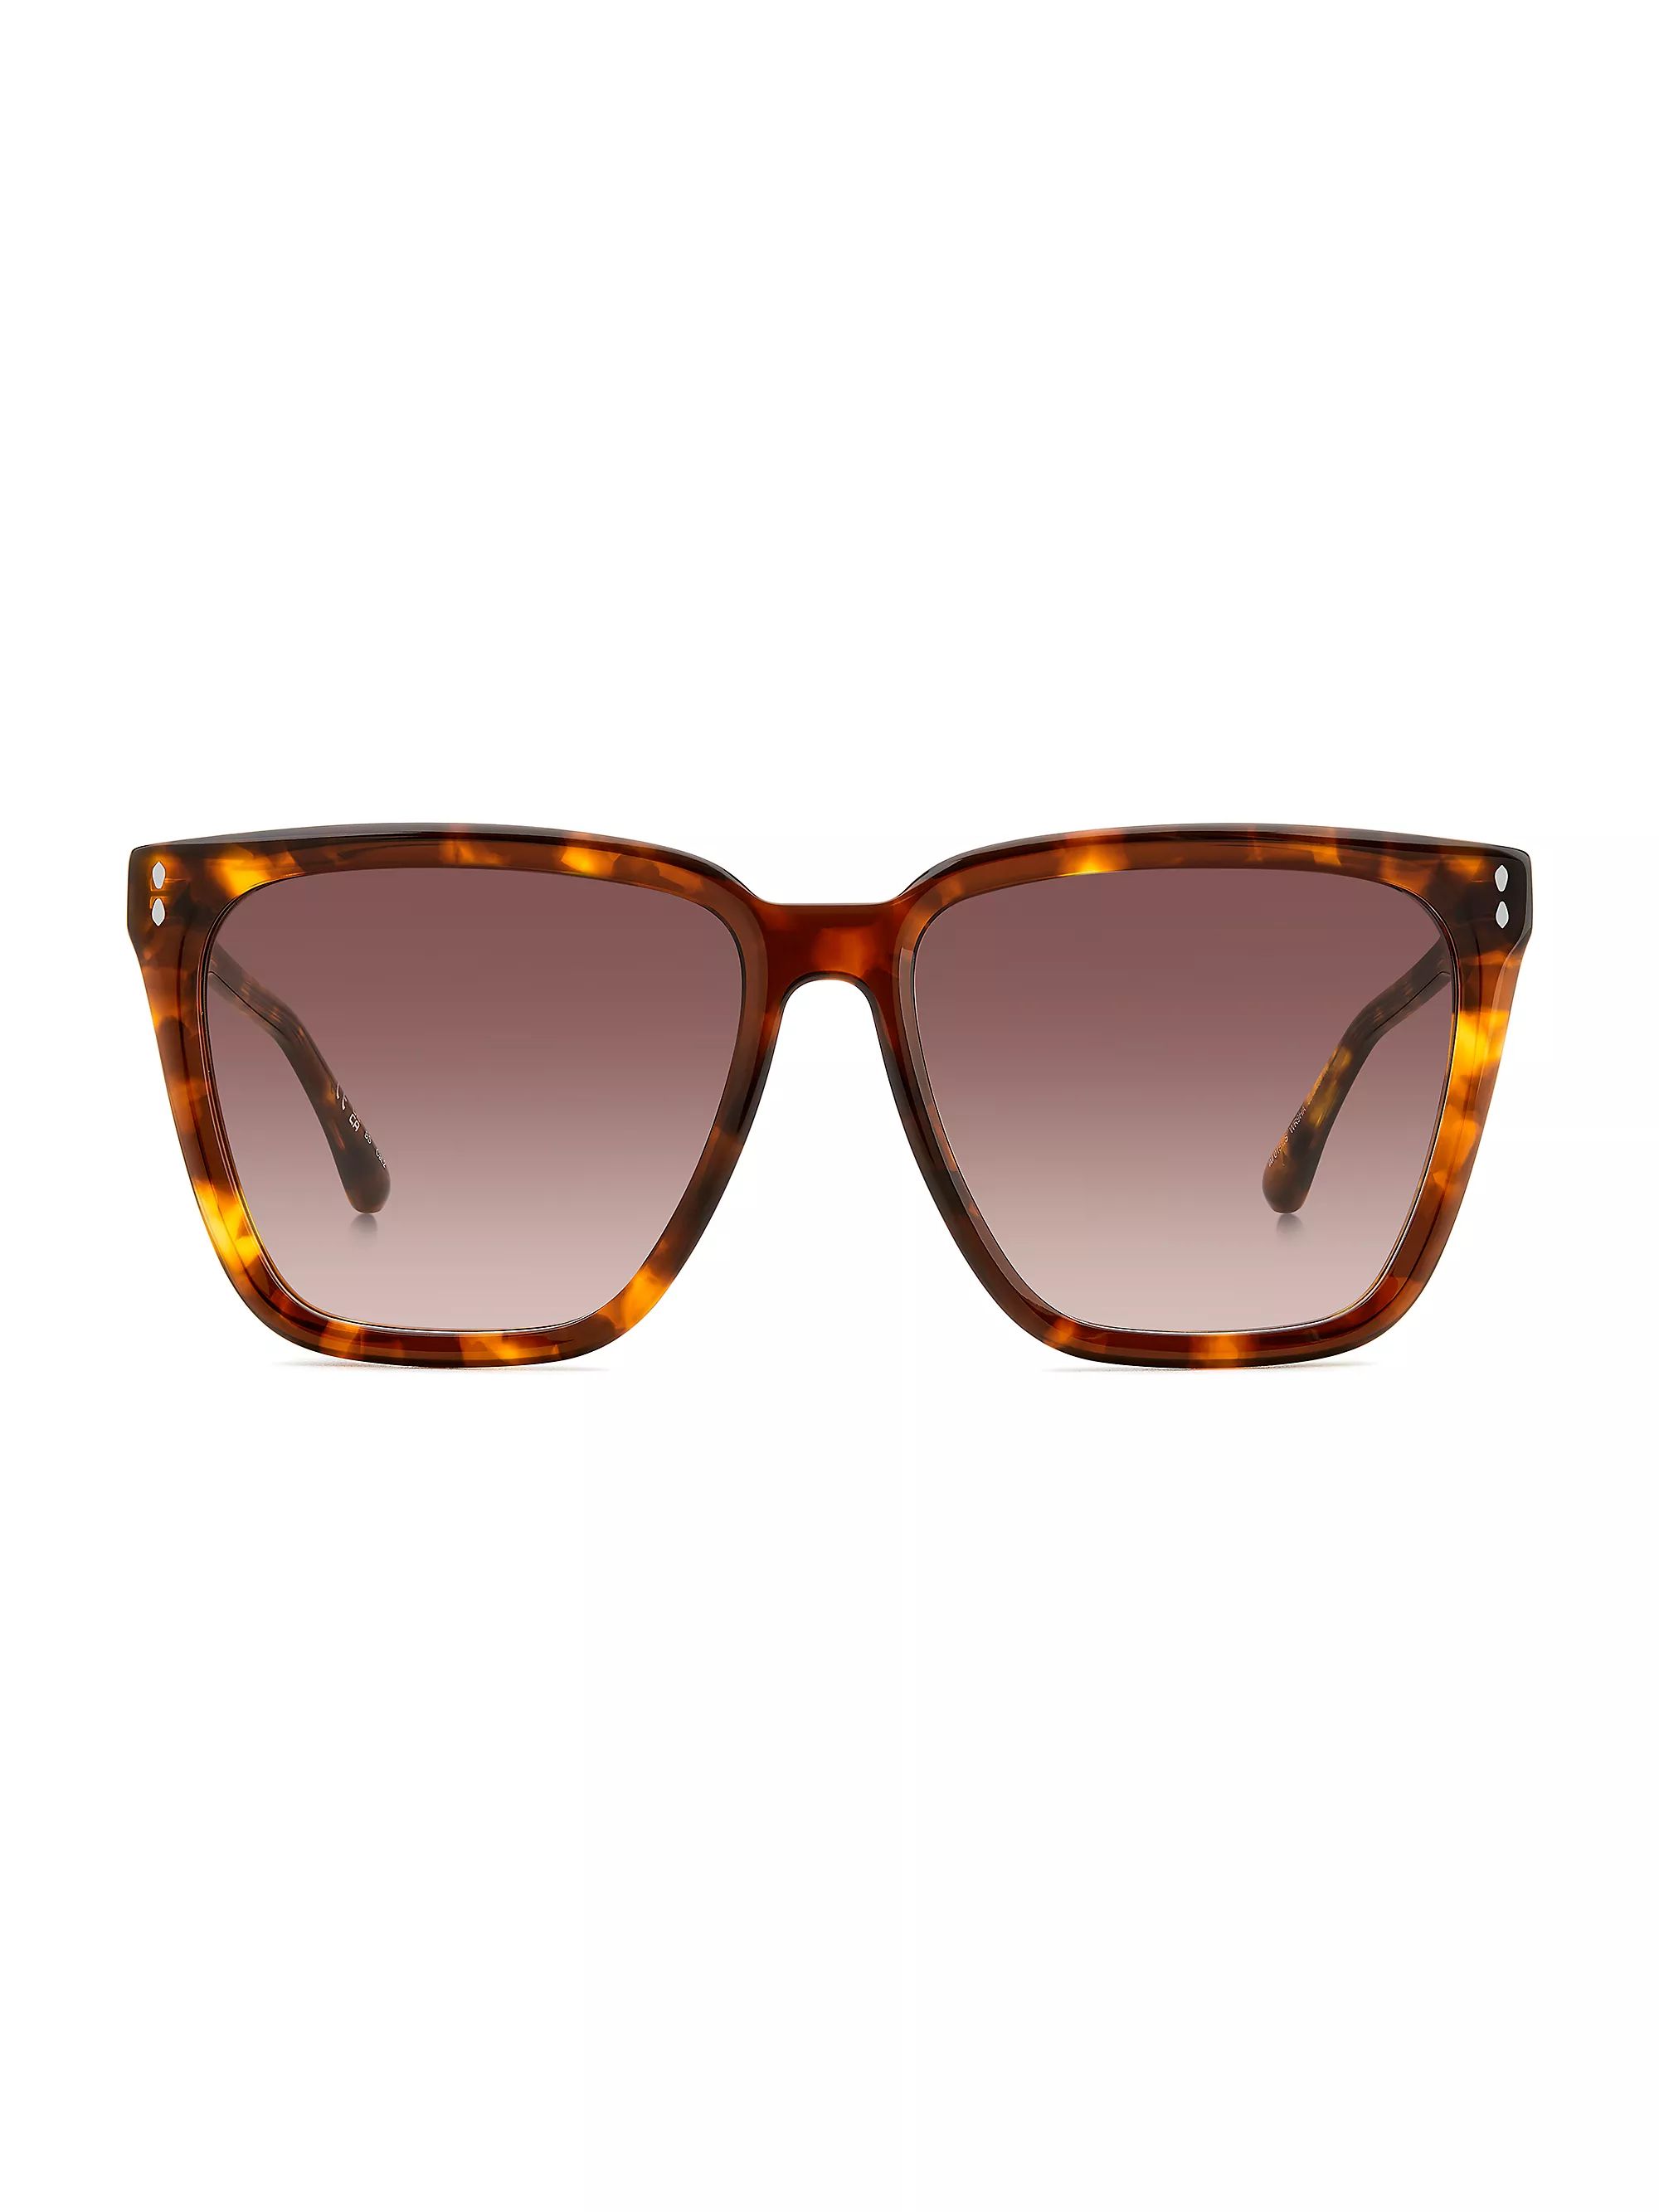 IM 0151/S Square Sunglasses | Saks Fifth Avenue